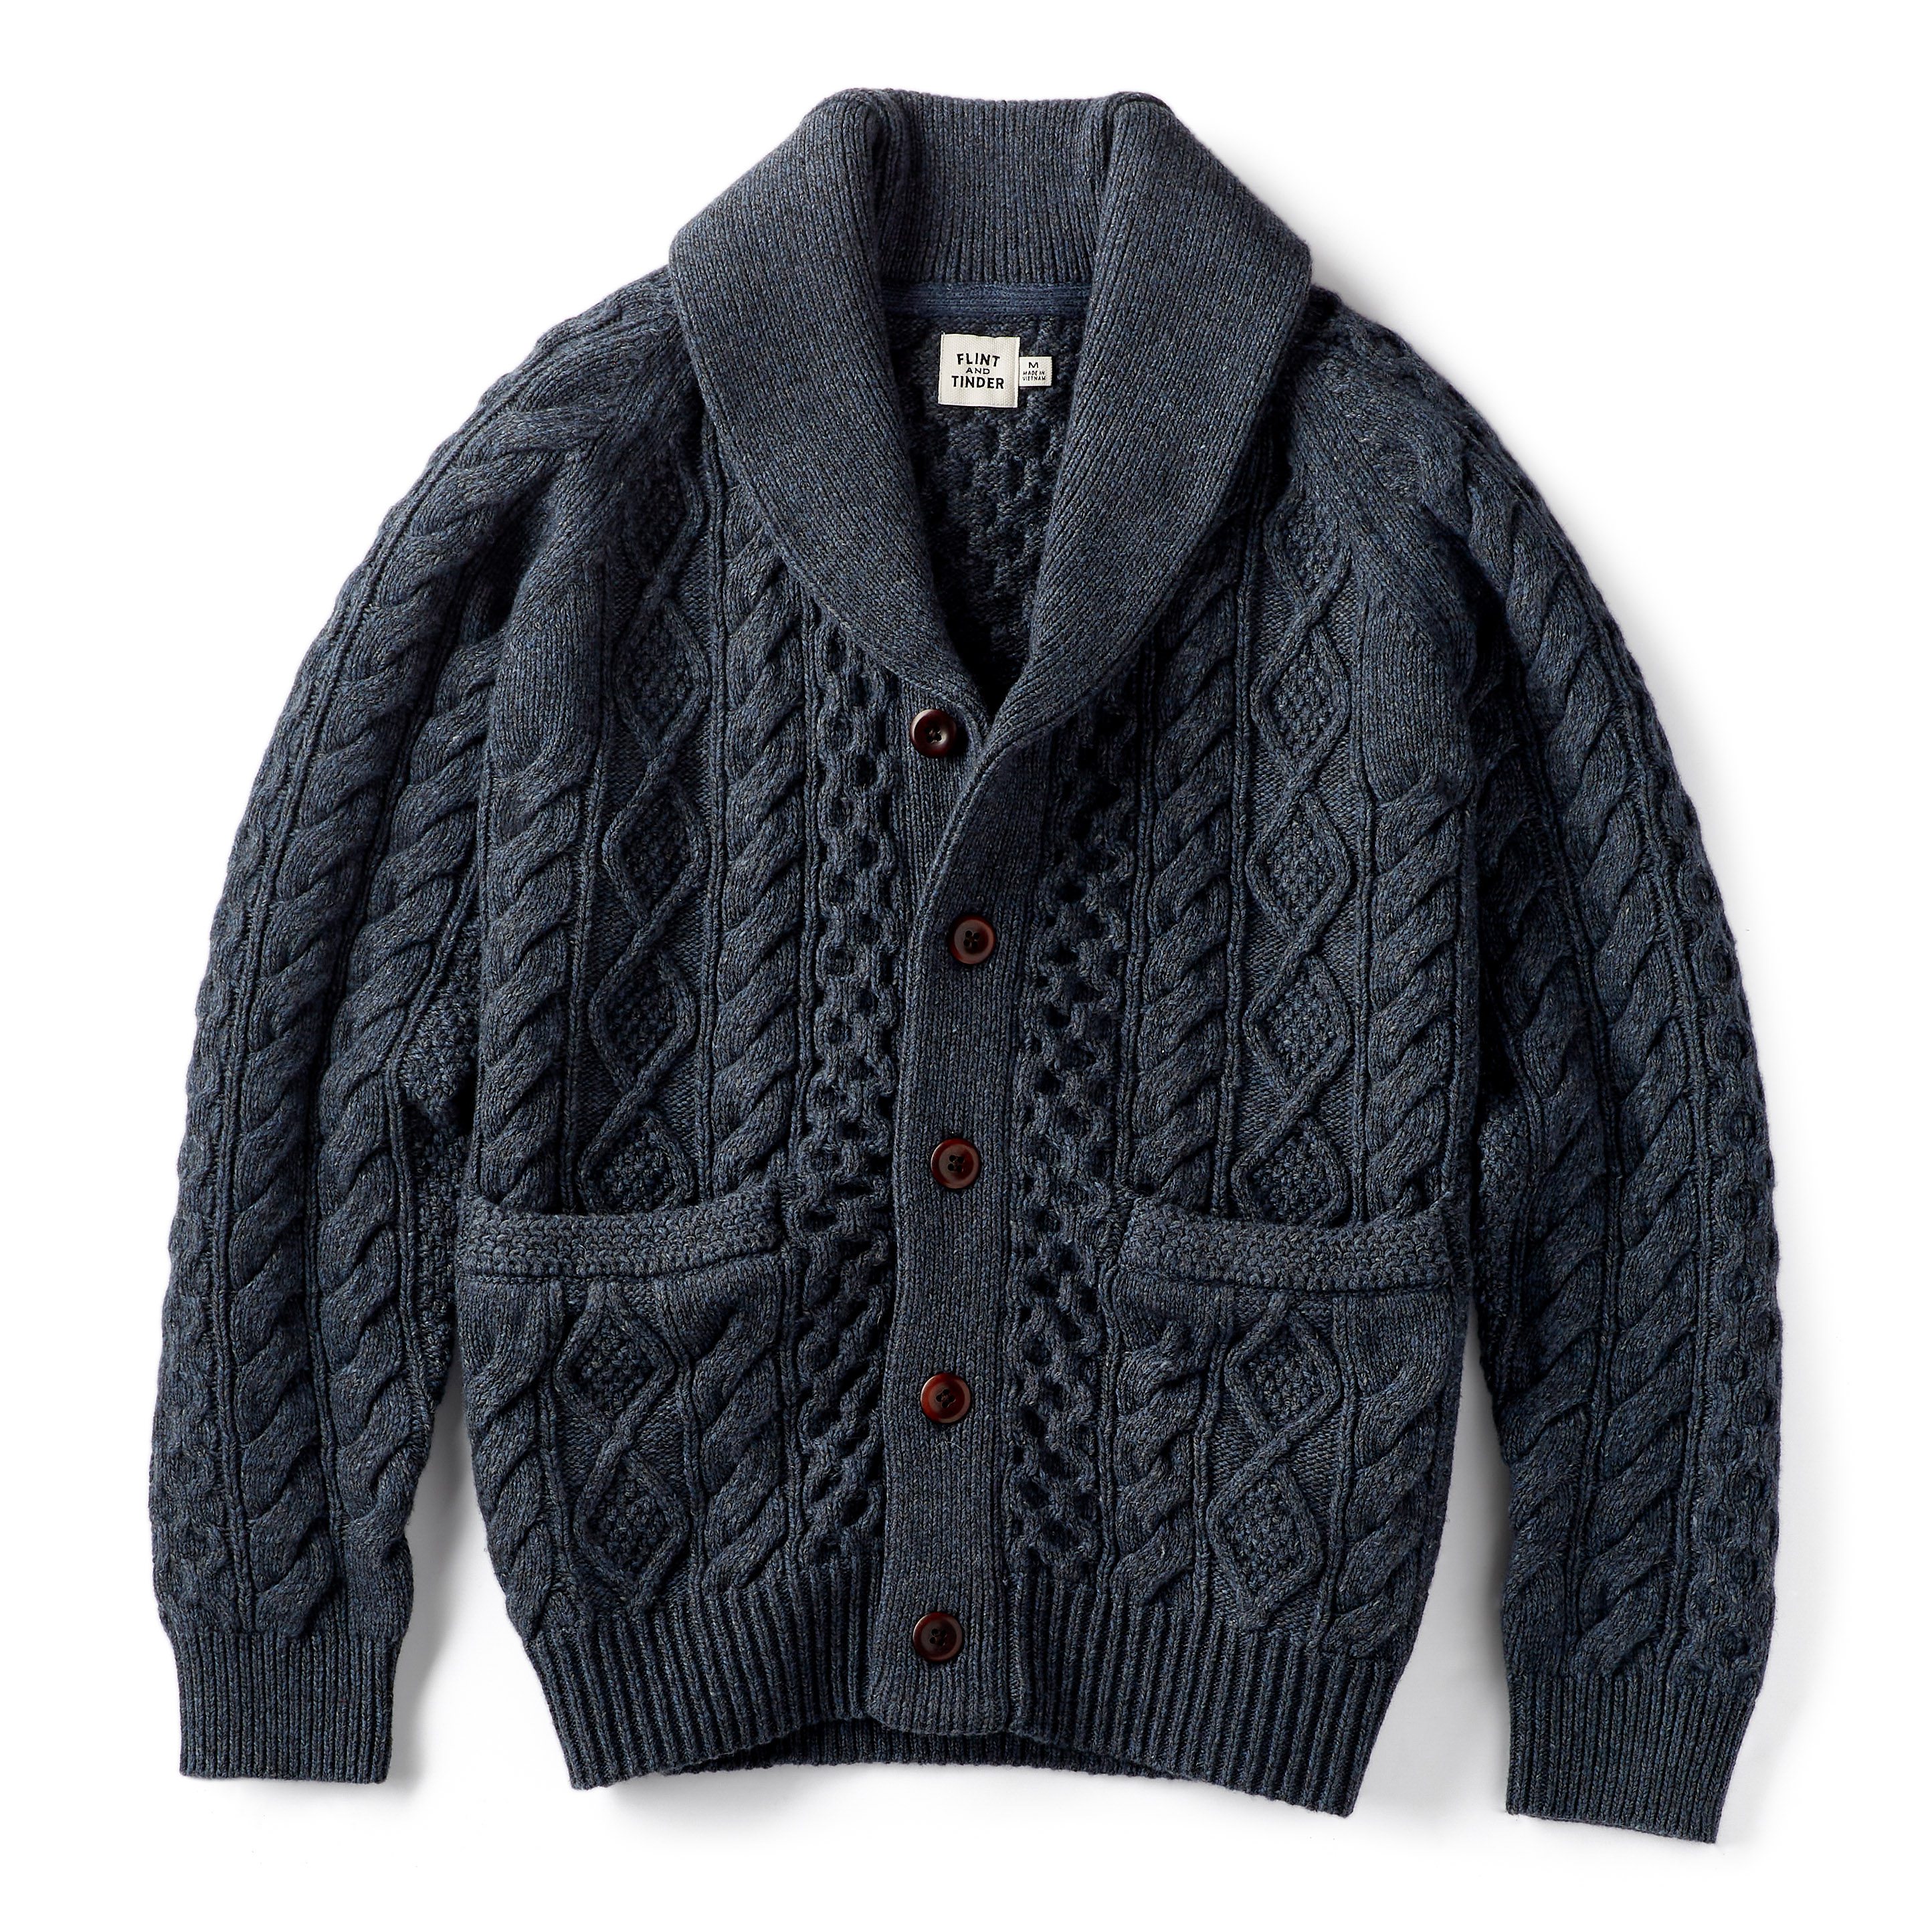 Aran Cable Knit Cardigan Sweater